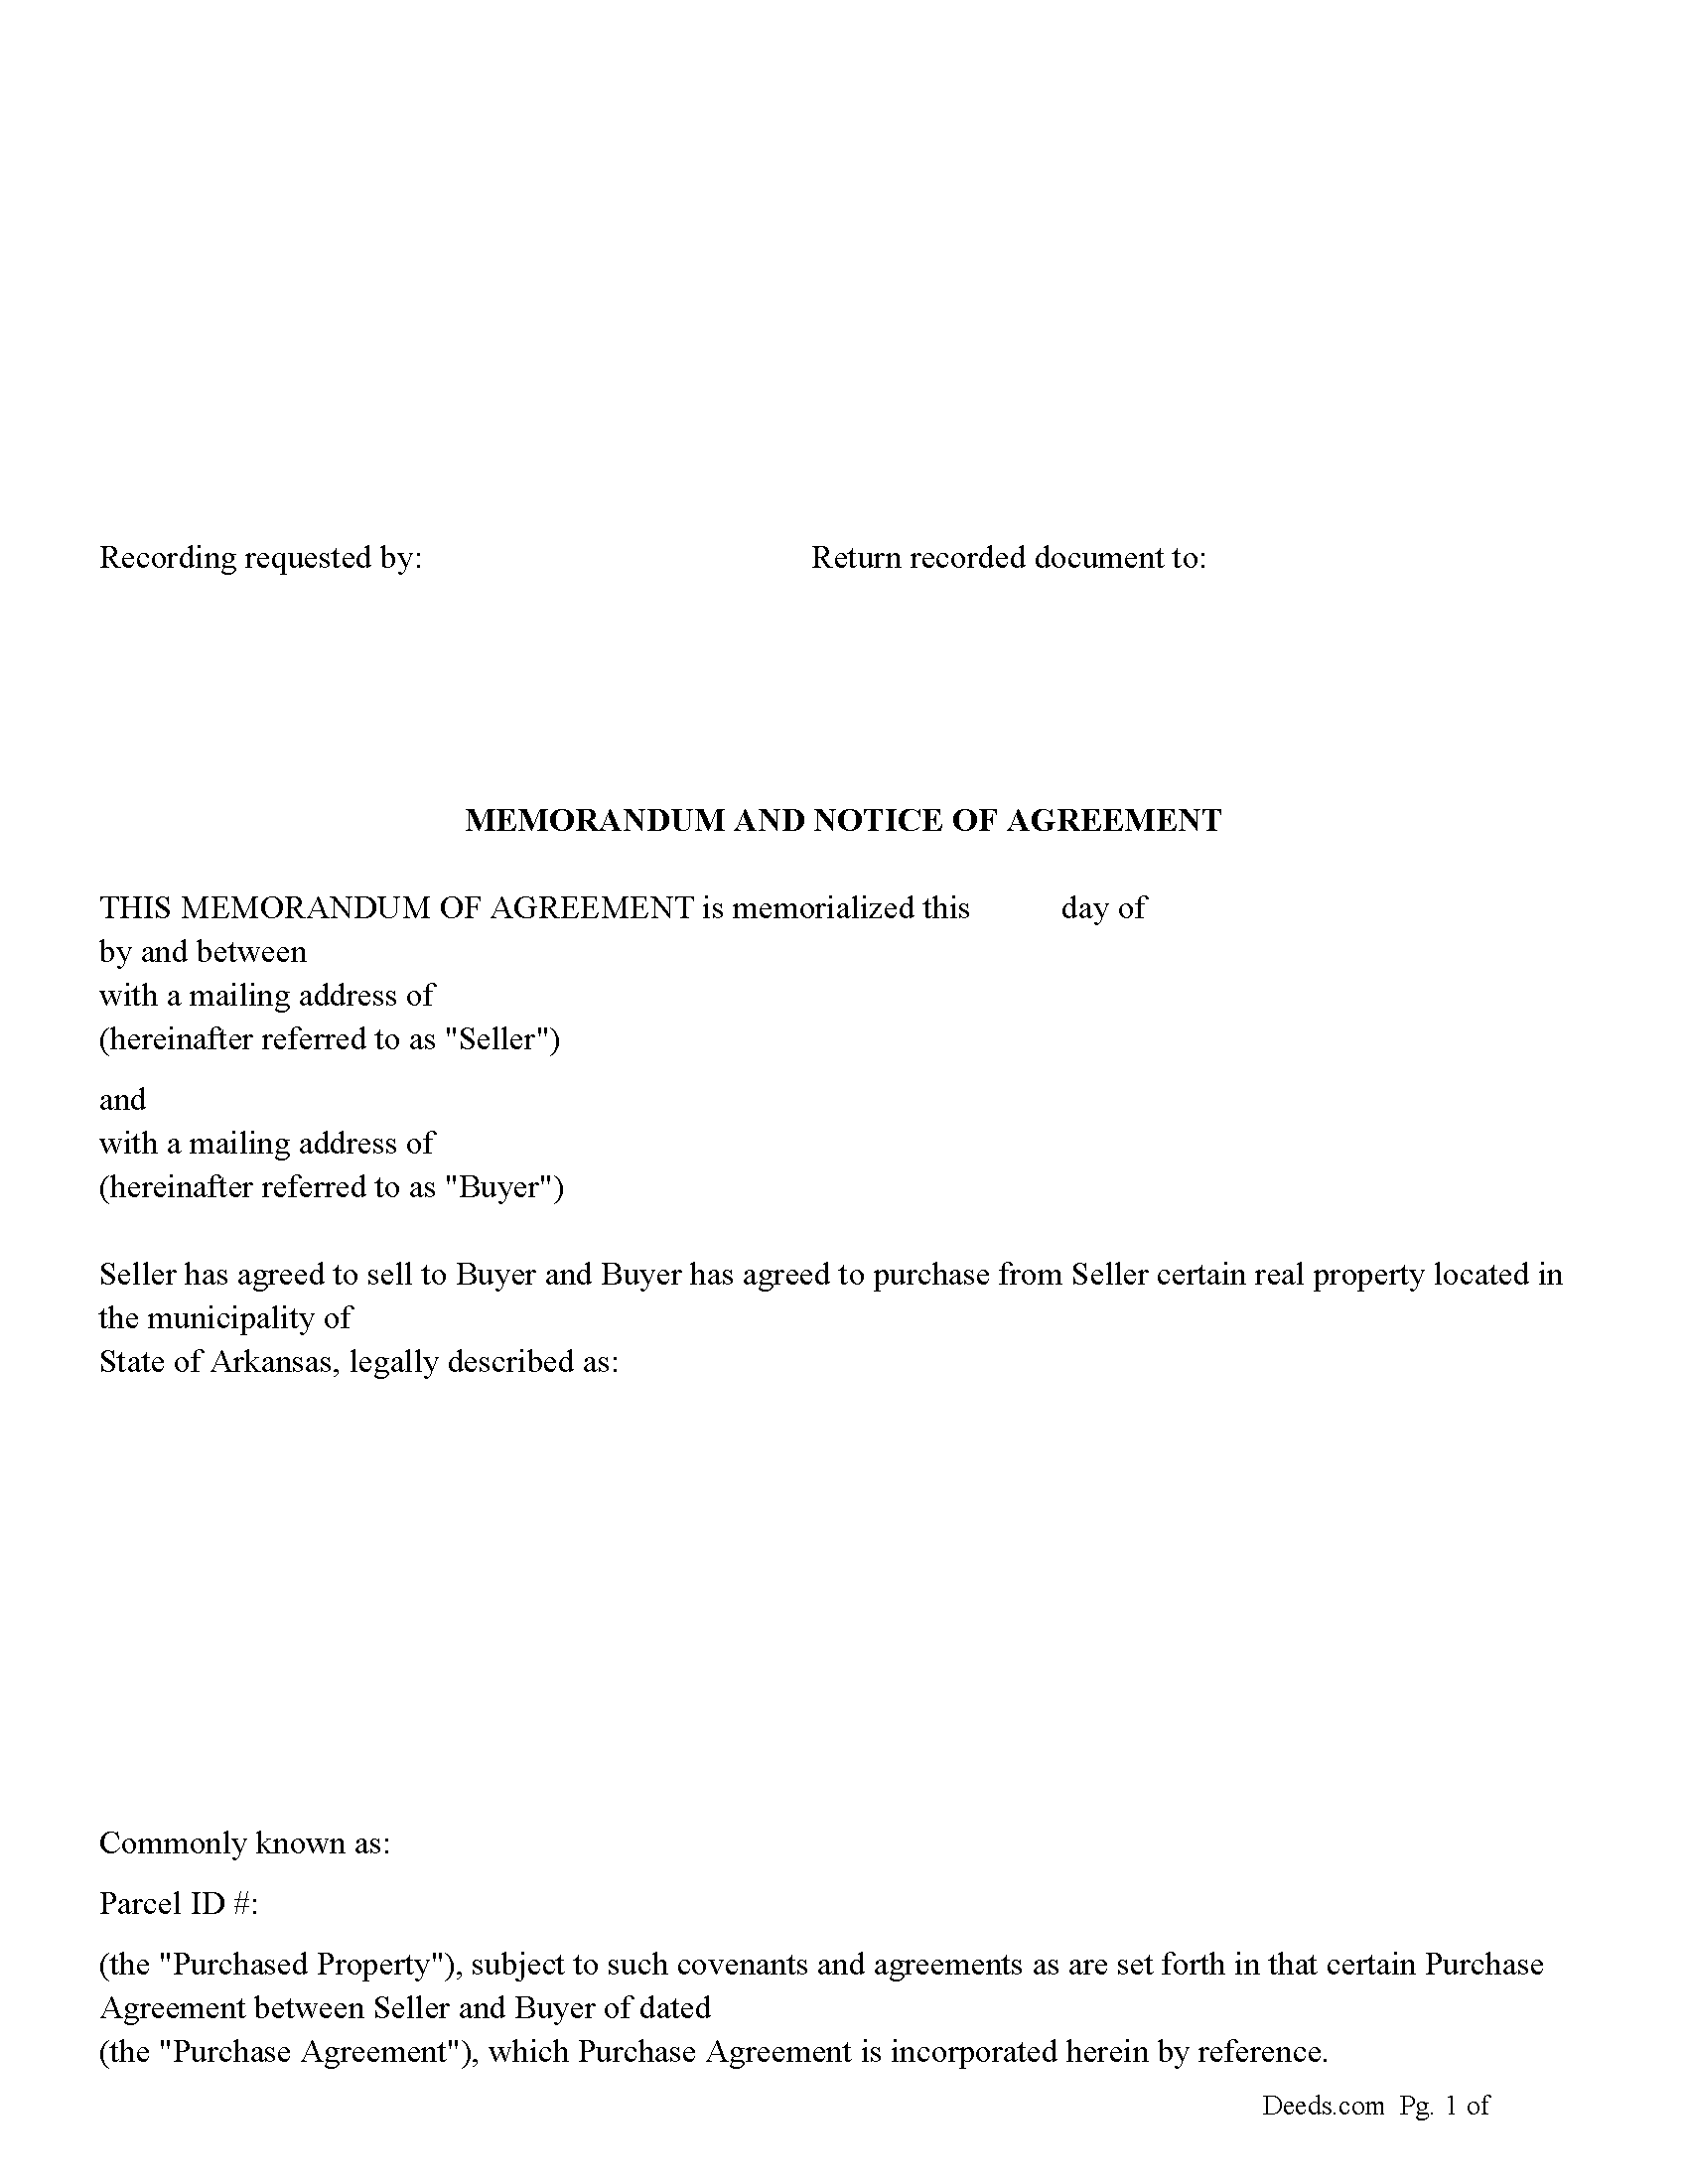 Arkansas Memorandum and Notice of Agreement Image